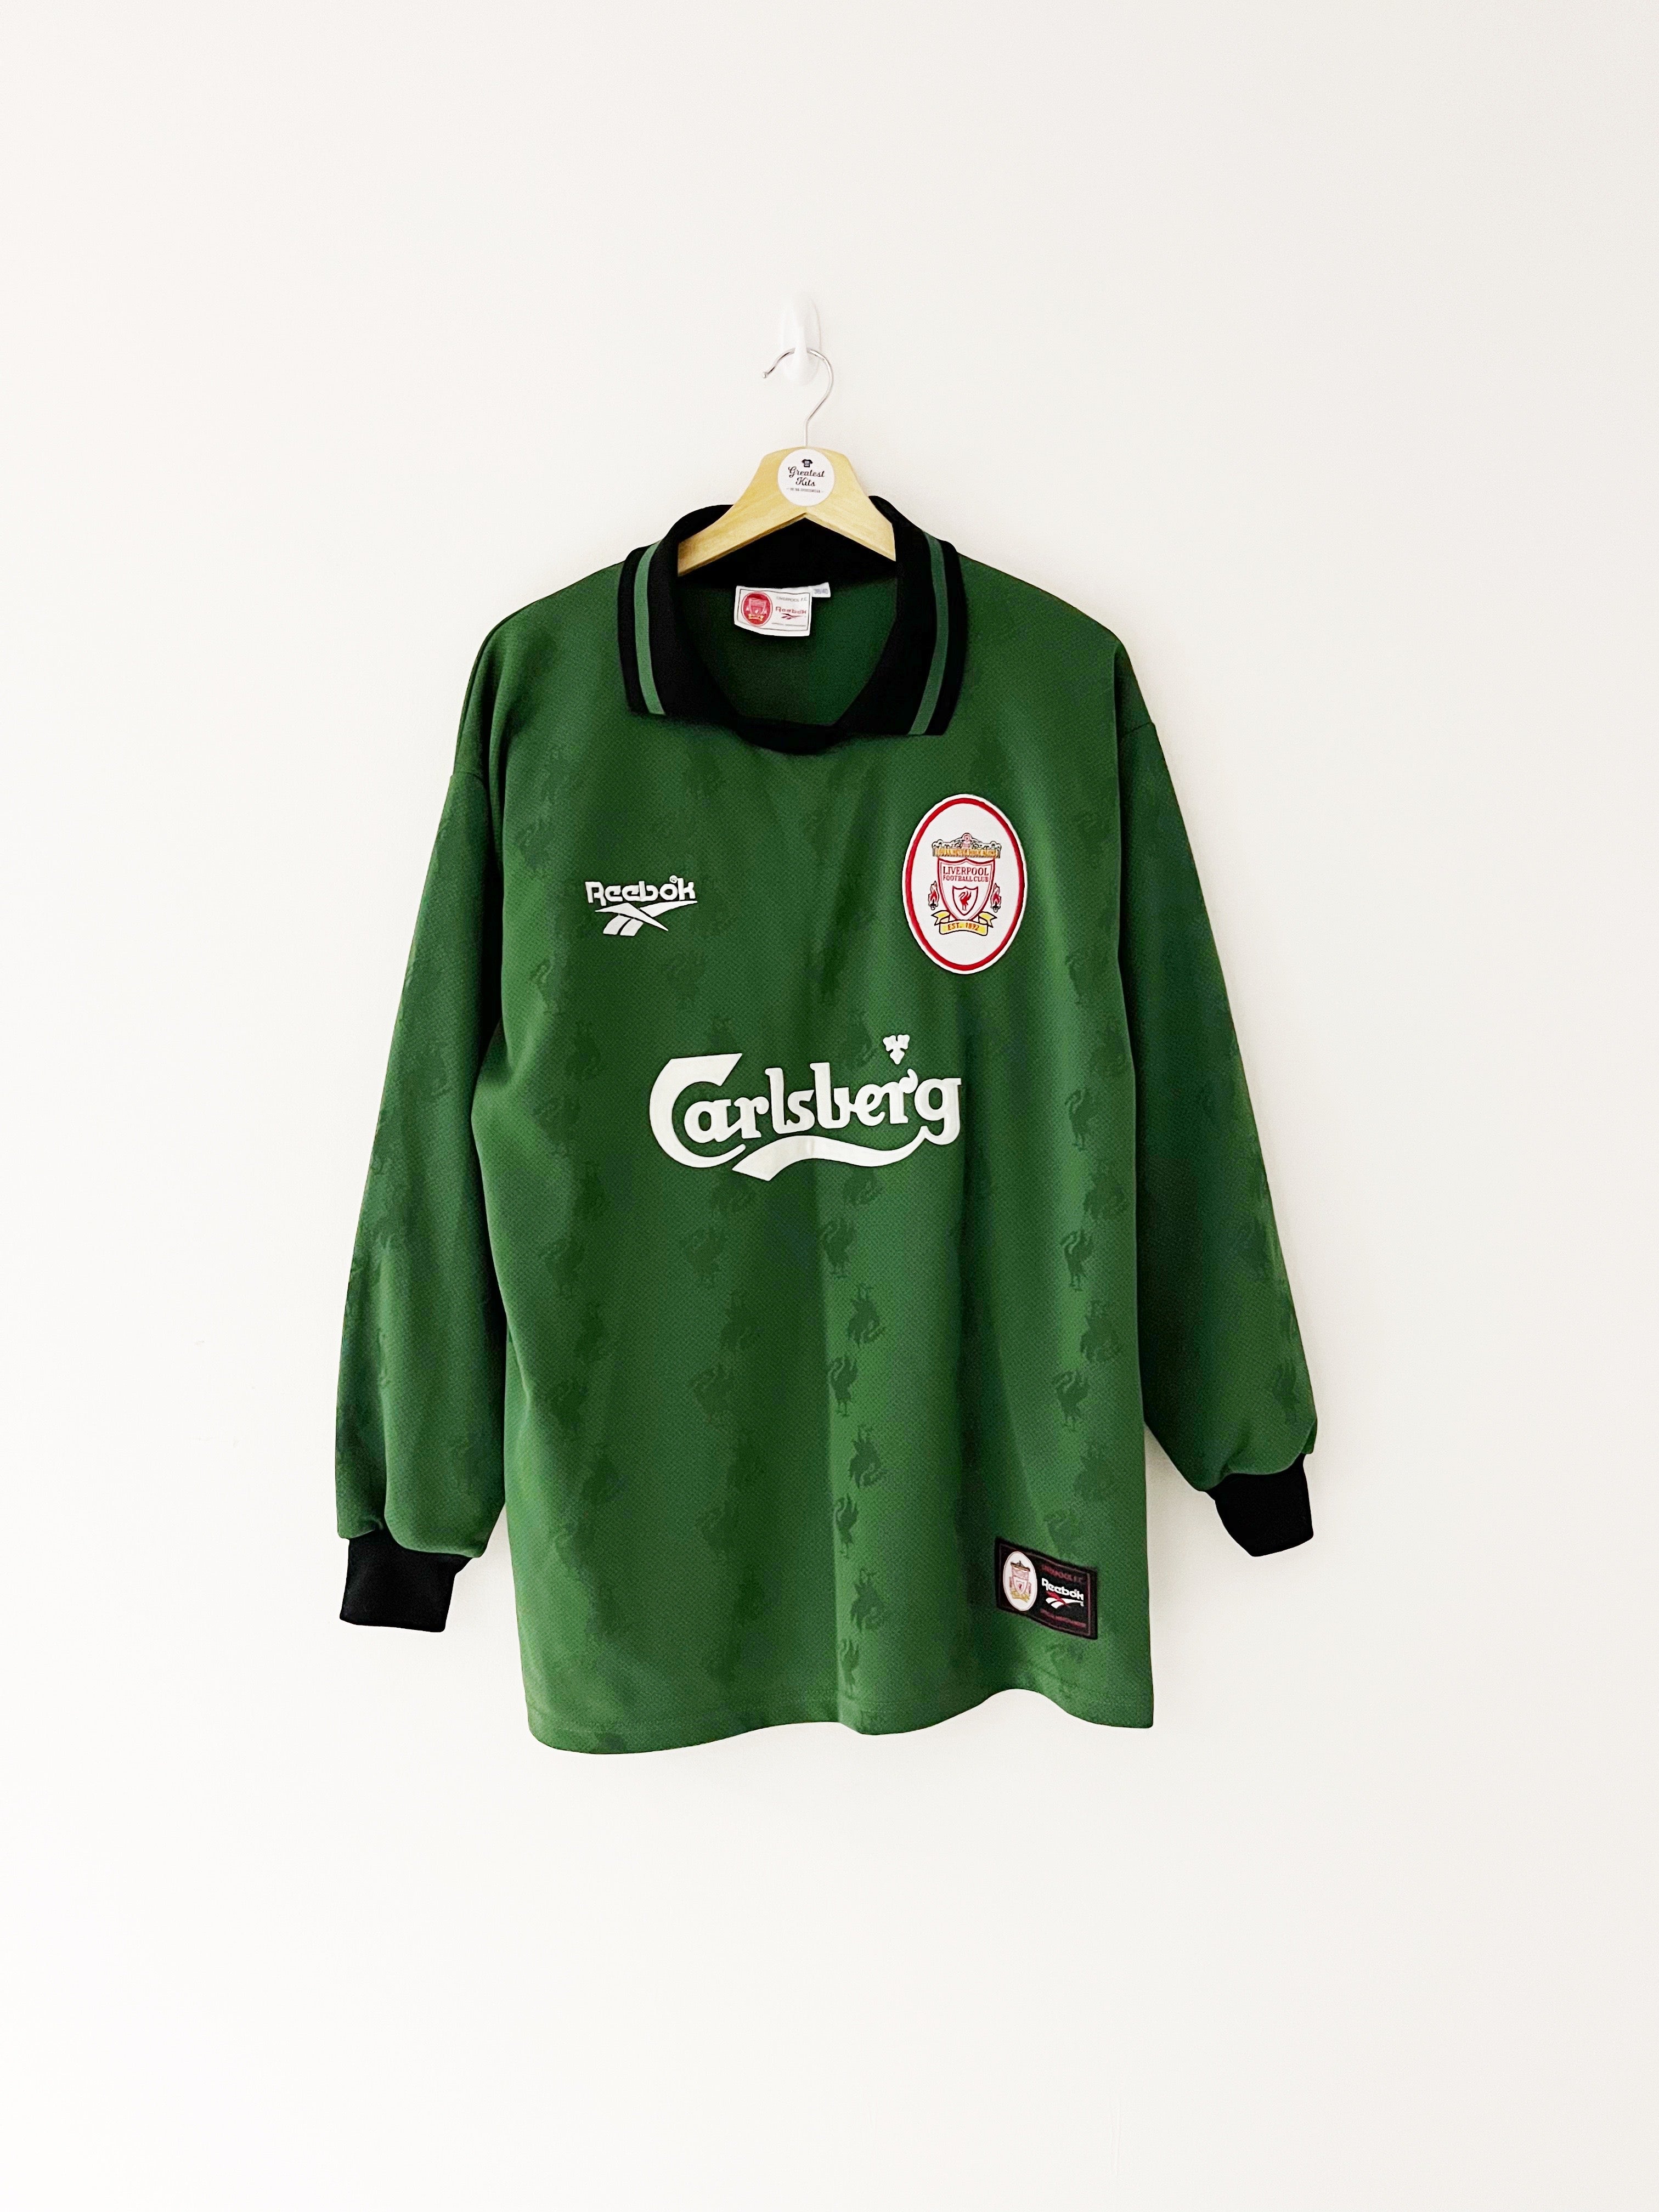 Maillot Liverpool GK 1996/97 (M) 9/10 